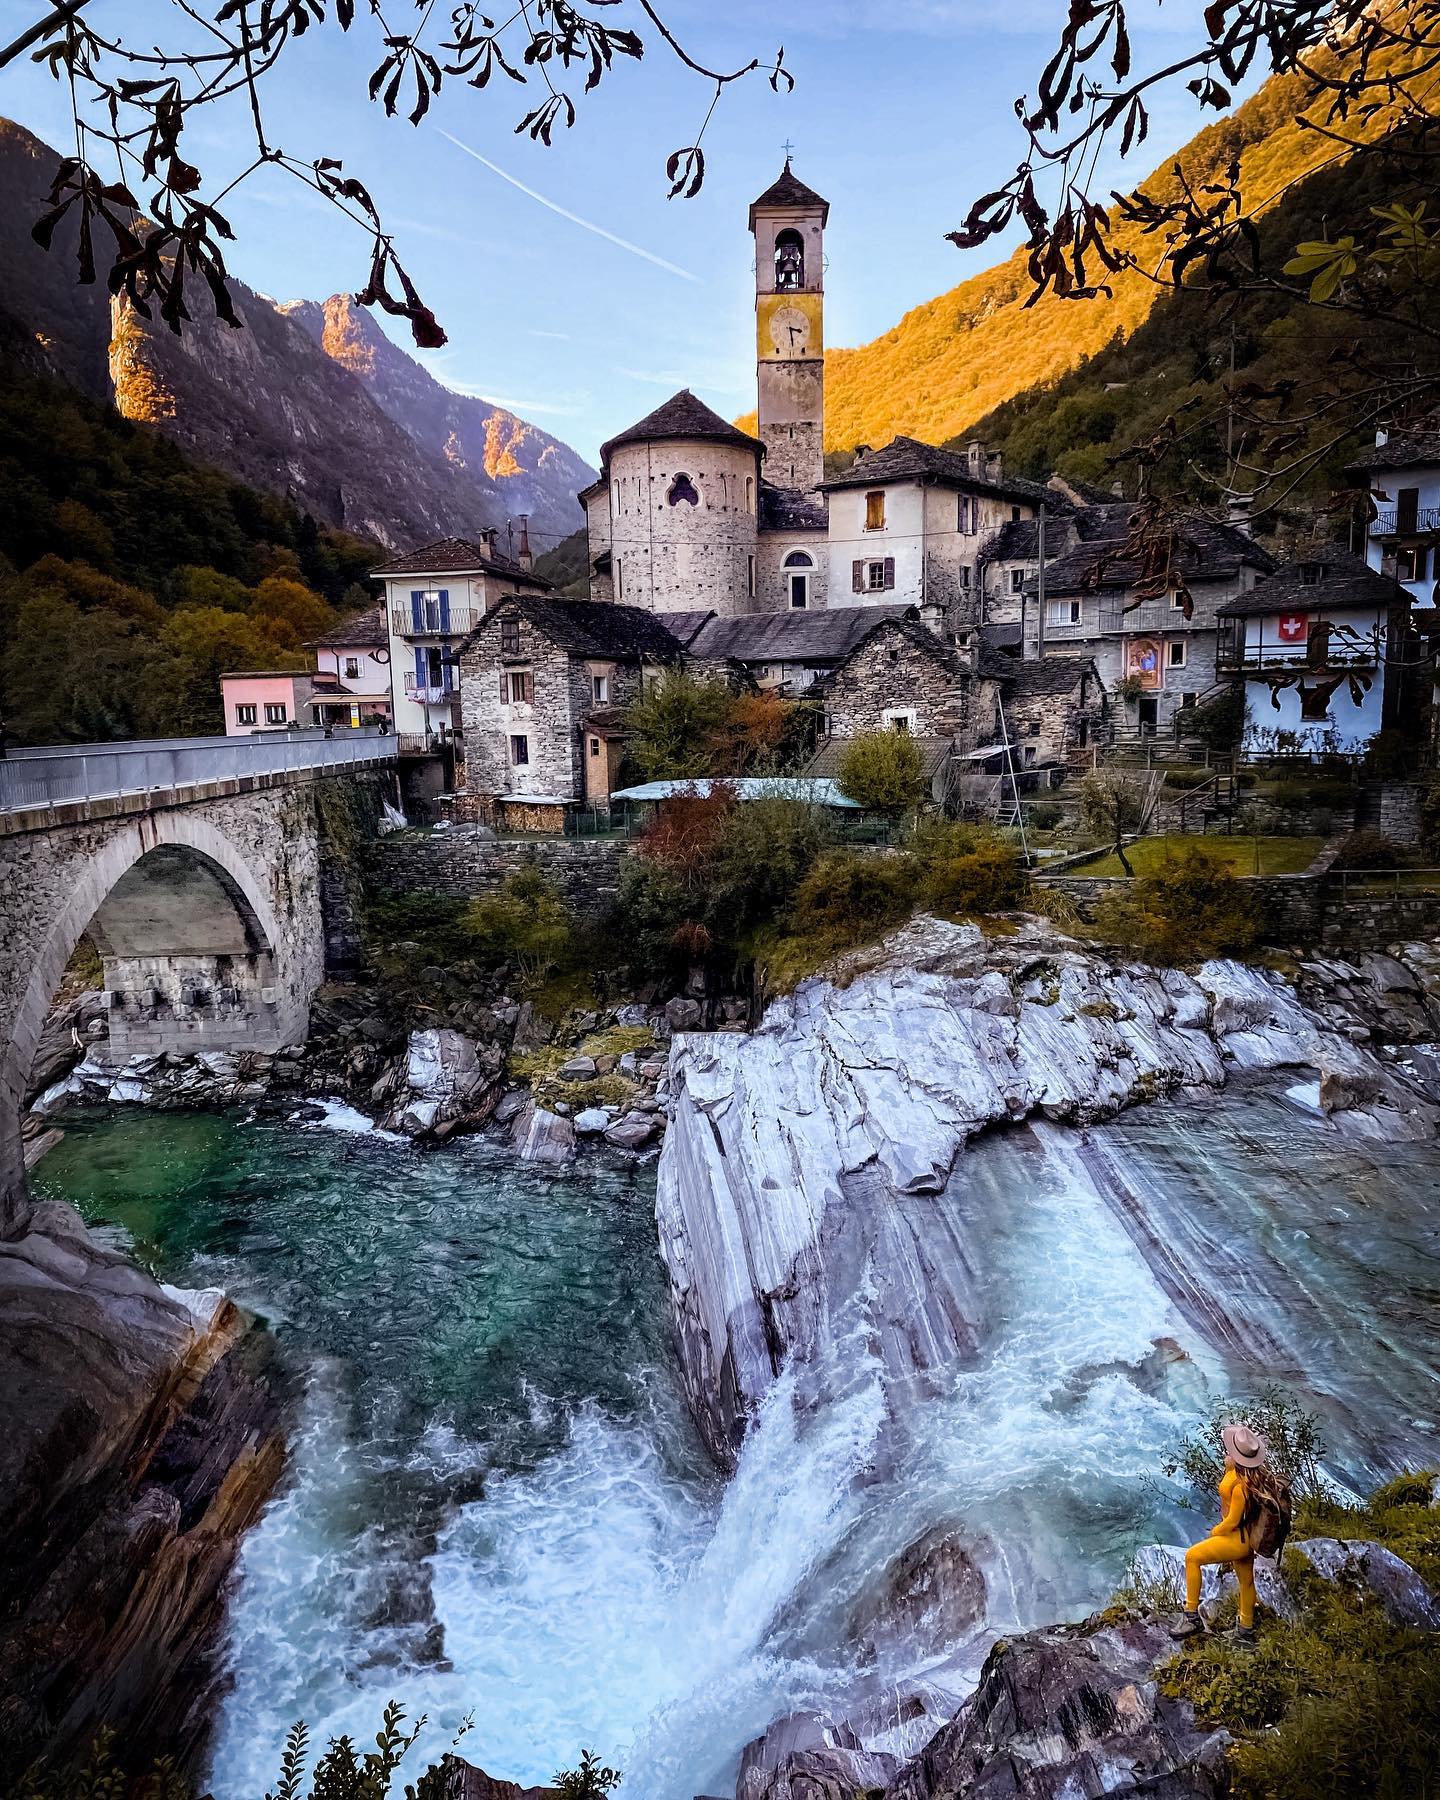 Probably the cutest village I’ve ever visited😍
Totally in love with Ticino 🇨🇭
.
.
📸by @luca.schranz 
.
.
#ticino #ticinoturismo #ticinomoments #lavertezzo #switzerland #switzerland🇨🇭 #schweiz #schweiz🇨🇭 #swiss #swissalps #swiss🇨🇭 #swissmountains #bridge #waterfall #river #travelgirl #adventure #adventuregirl #hikinggirl #hike #hiking #mountaingirl #explore #welltravelled #wanderlust #stayandwander #wandermore #iamtb #naturelovers